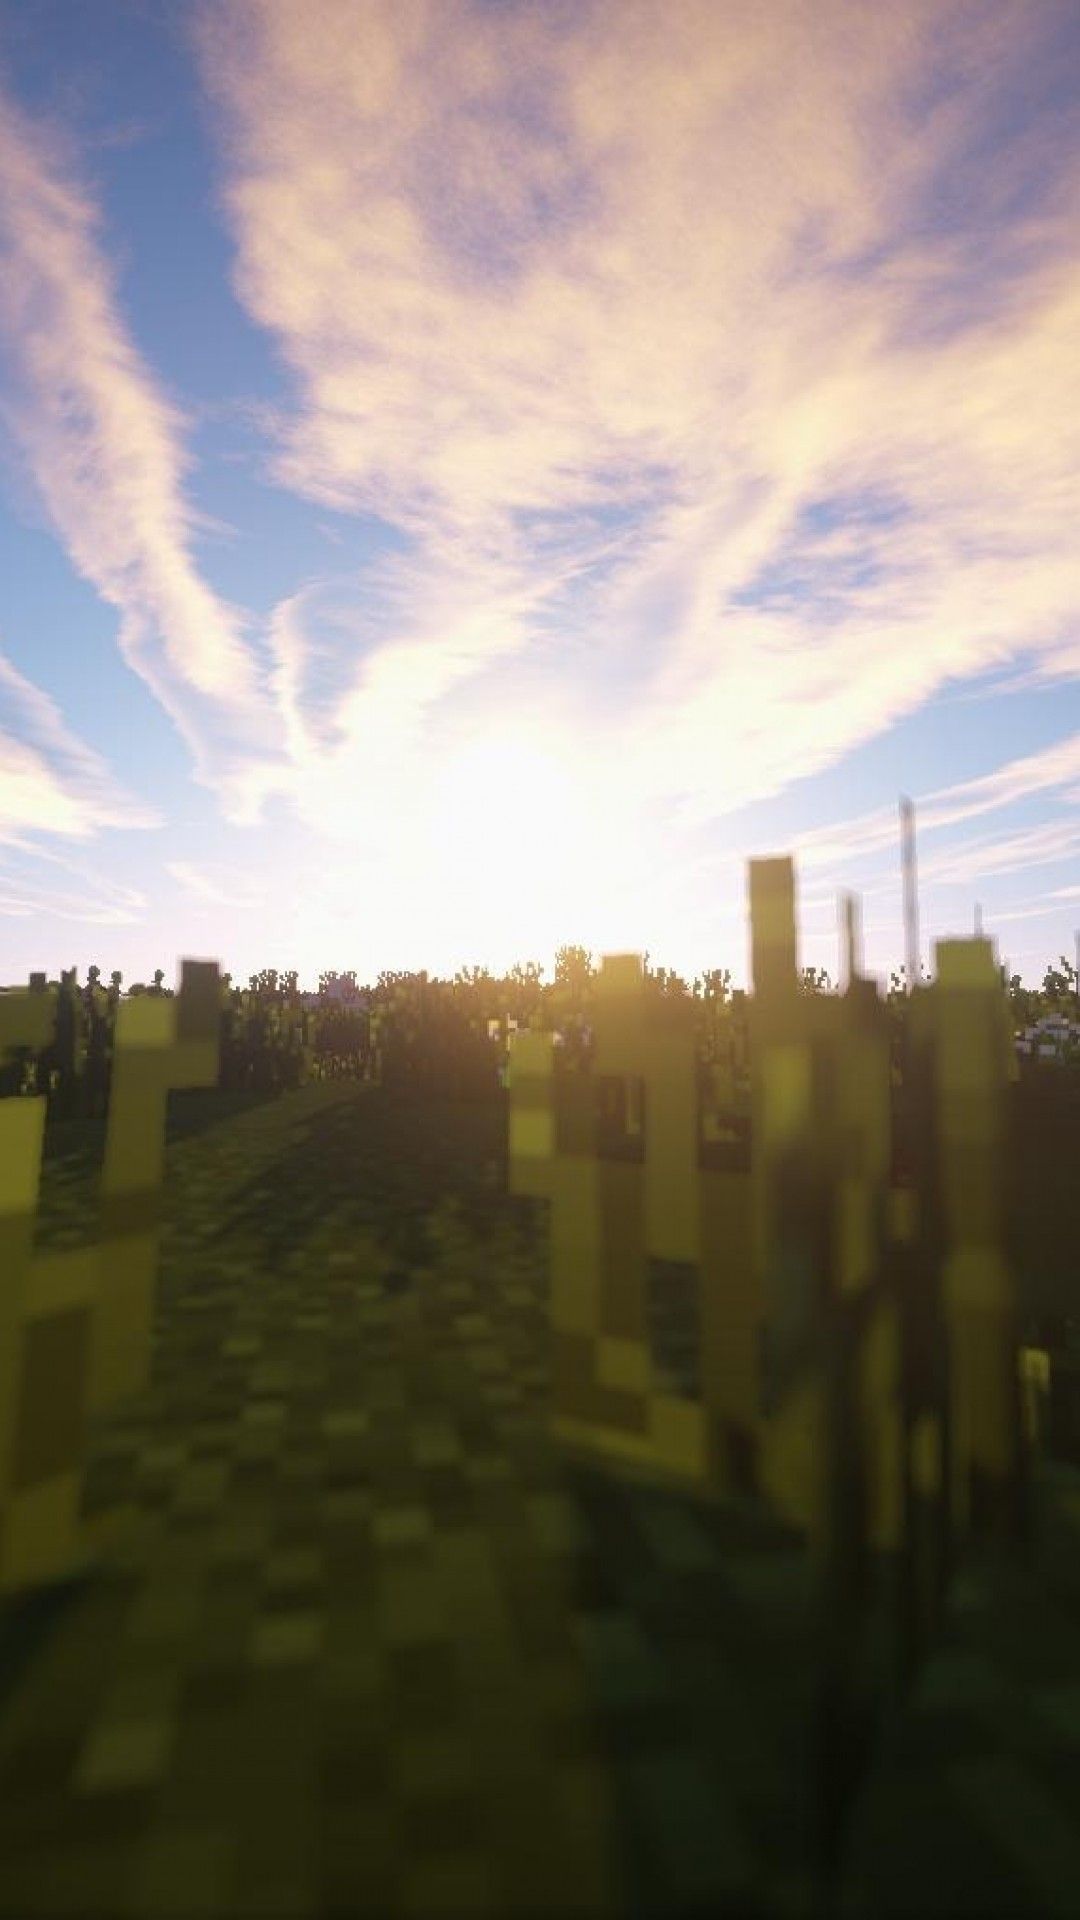 Minecraft phone wallpaper with a grassy hillside at sunset - Minecraft